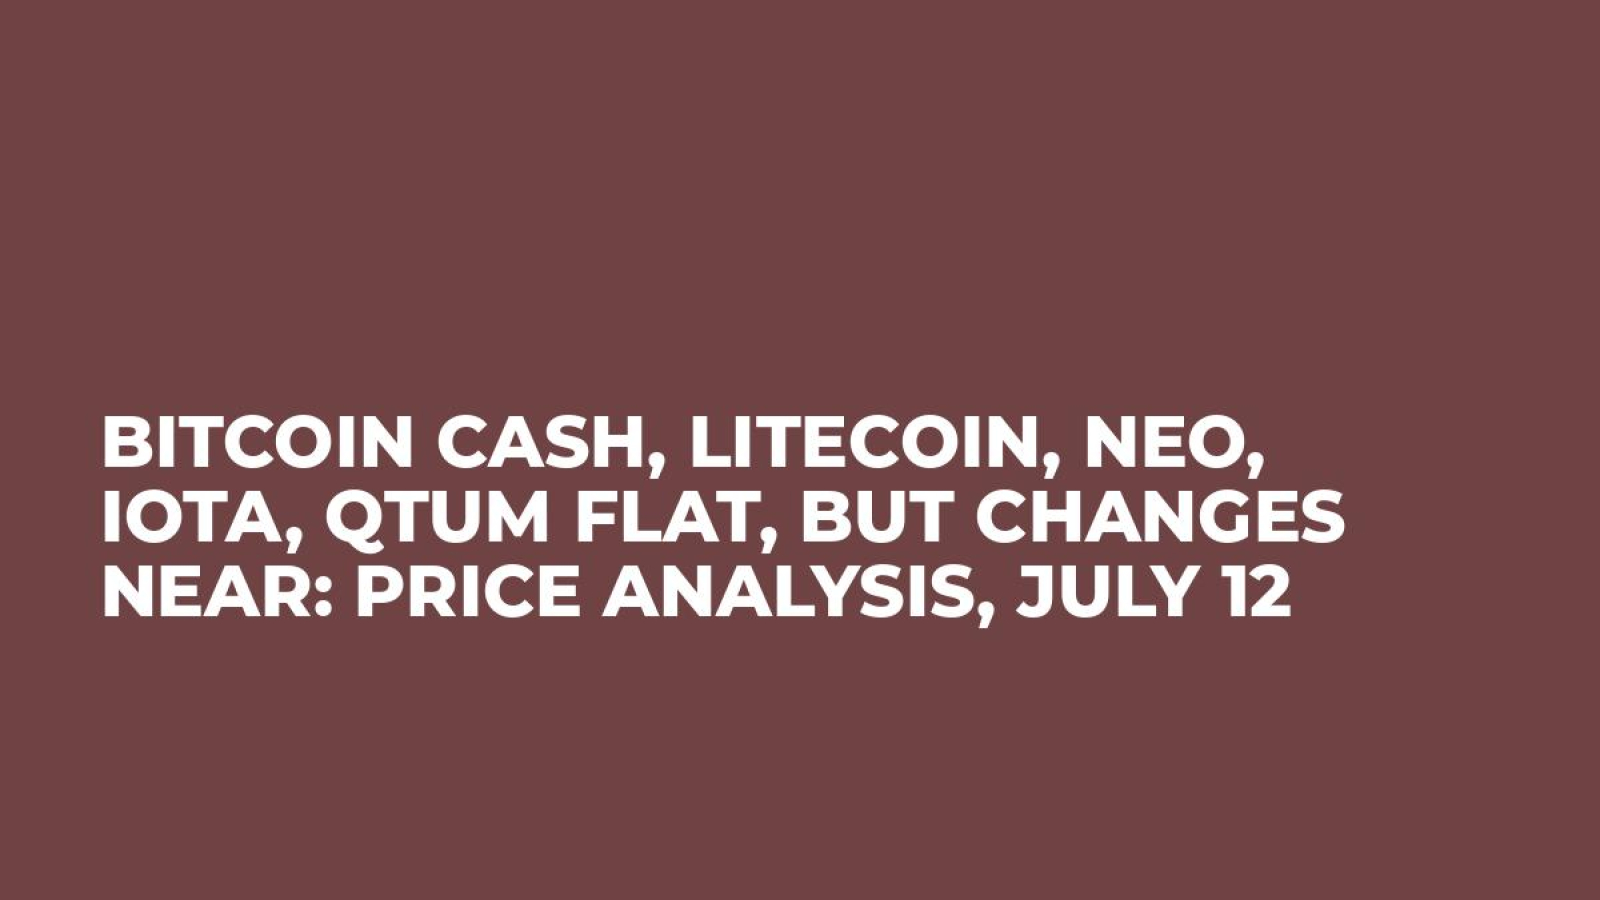 Bitcoin Cash, Litecoin, Neo, IOTA, QTUM Flat, But Changes Near: Price Analysis, July 12